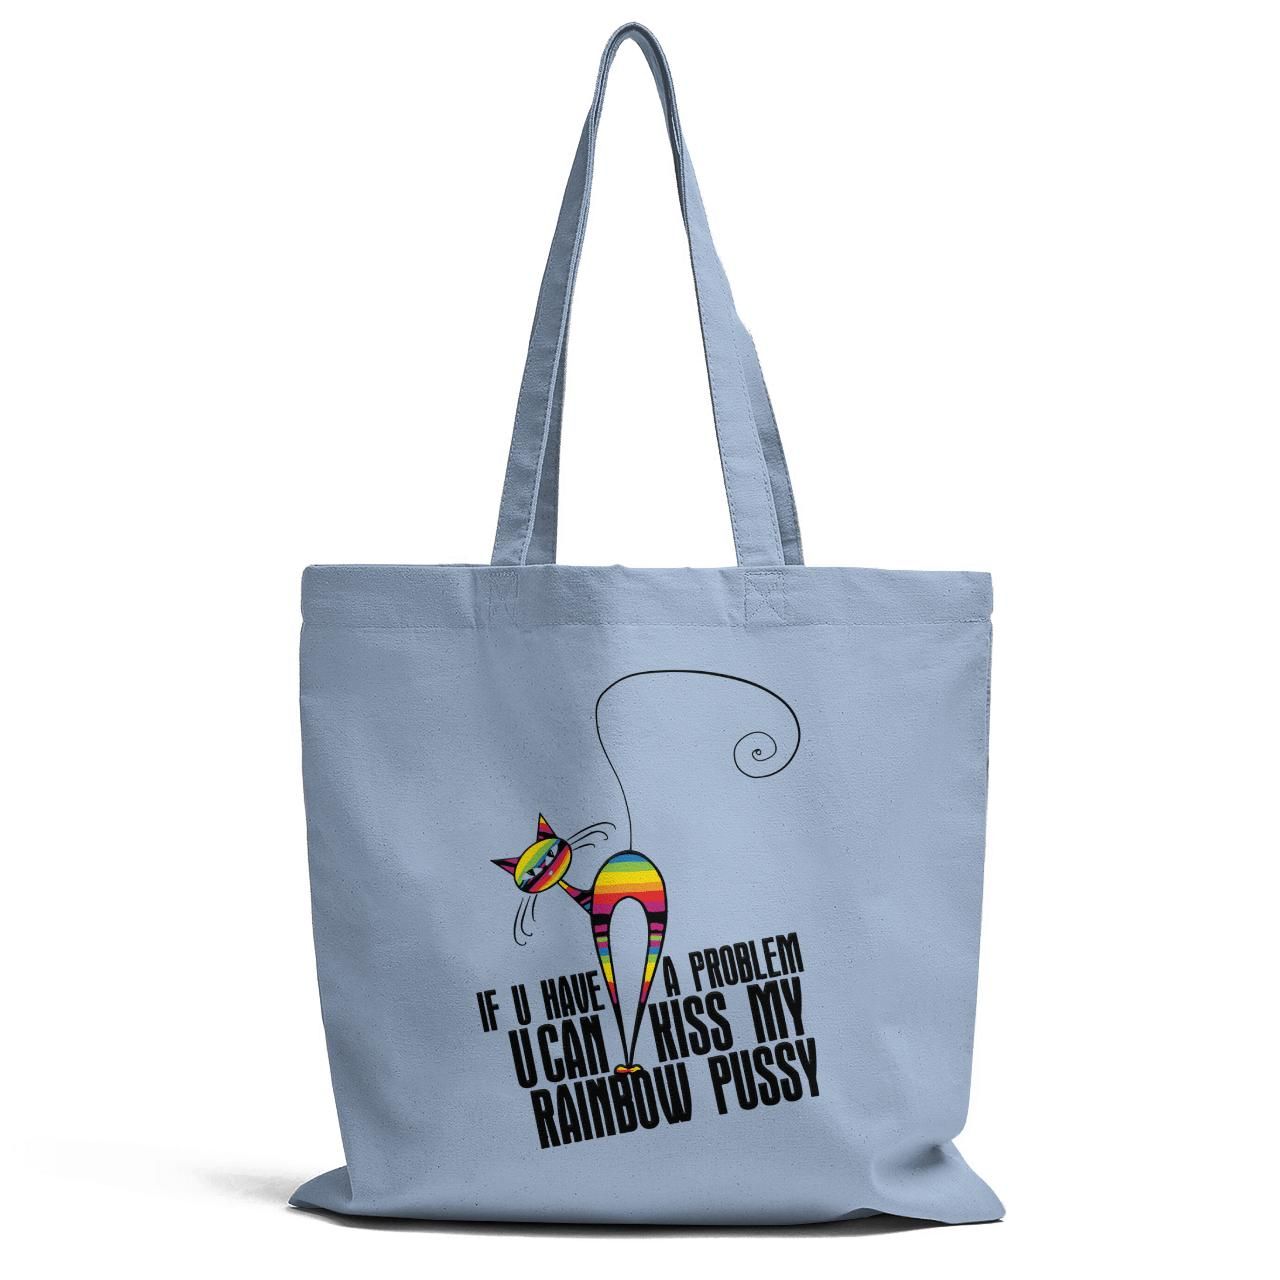 U Can Kiss My Rainbow Pussy Tote Bag